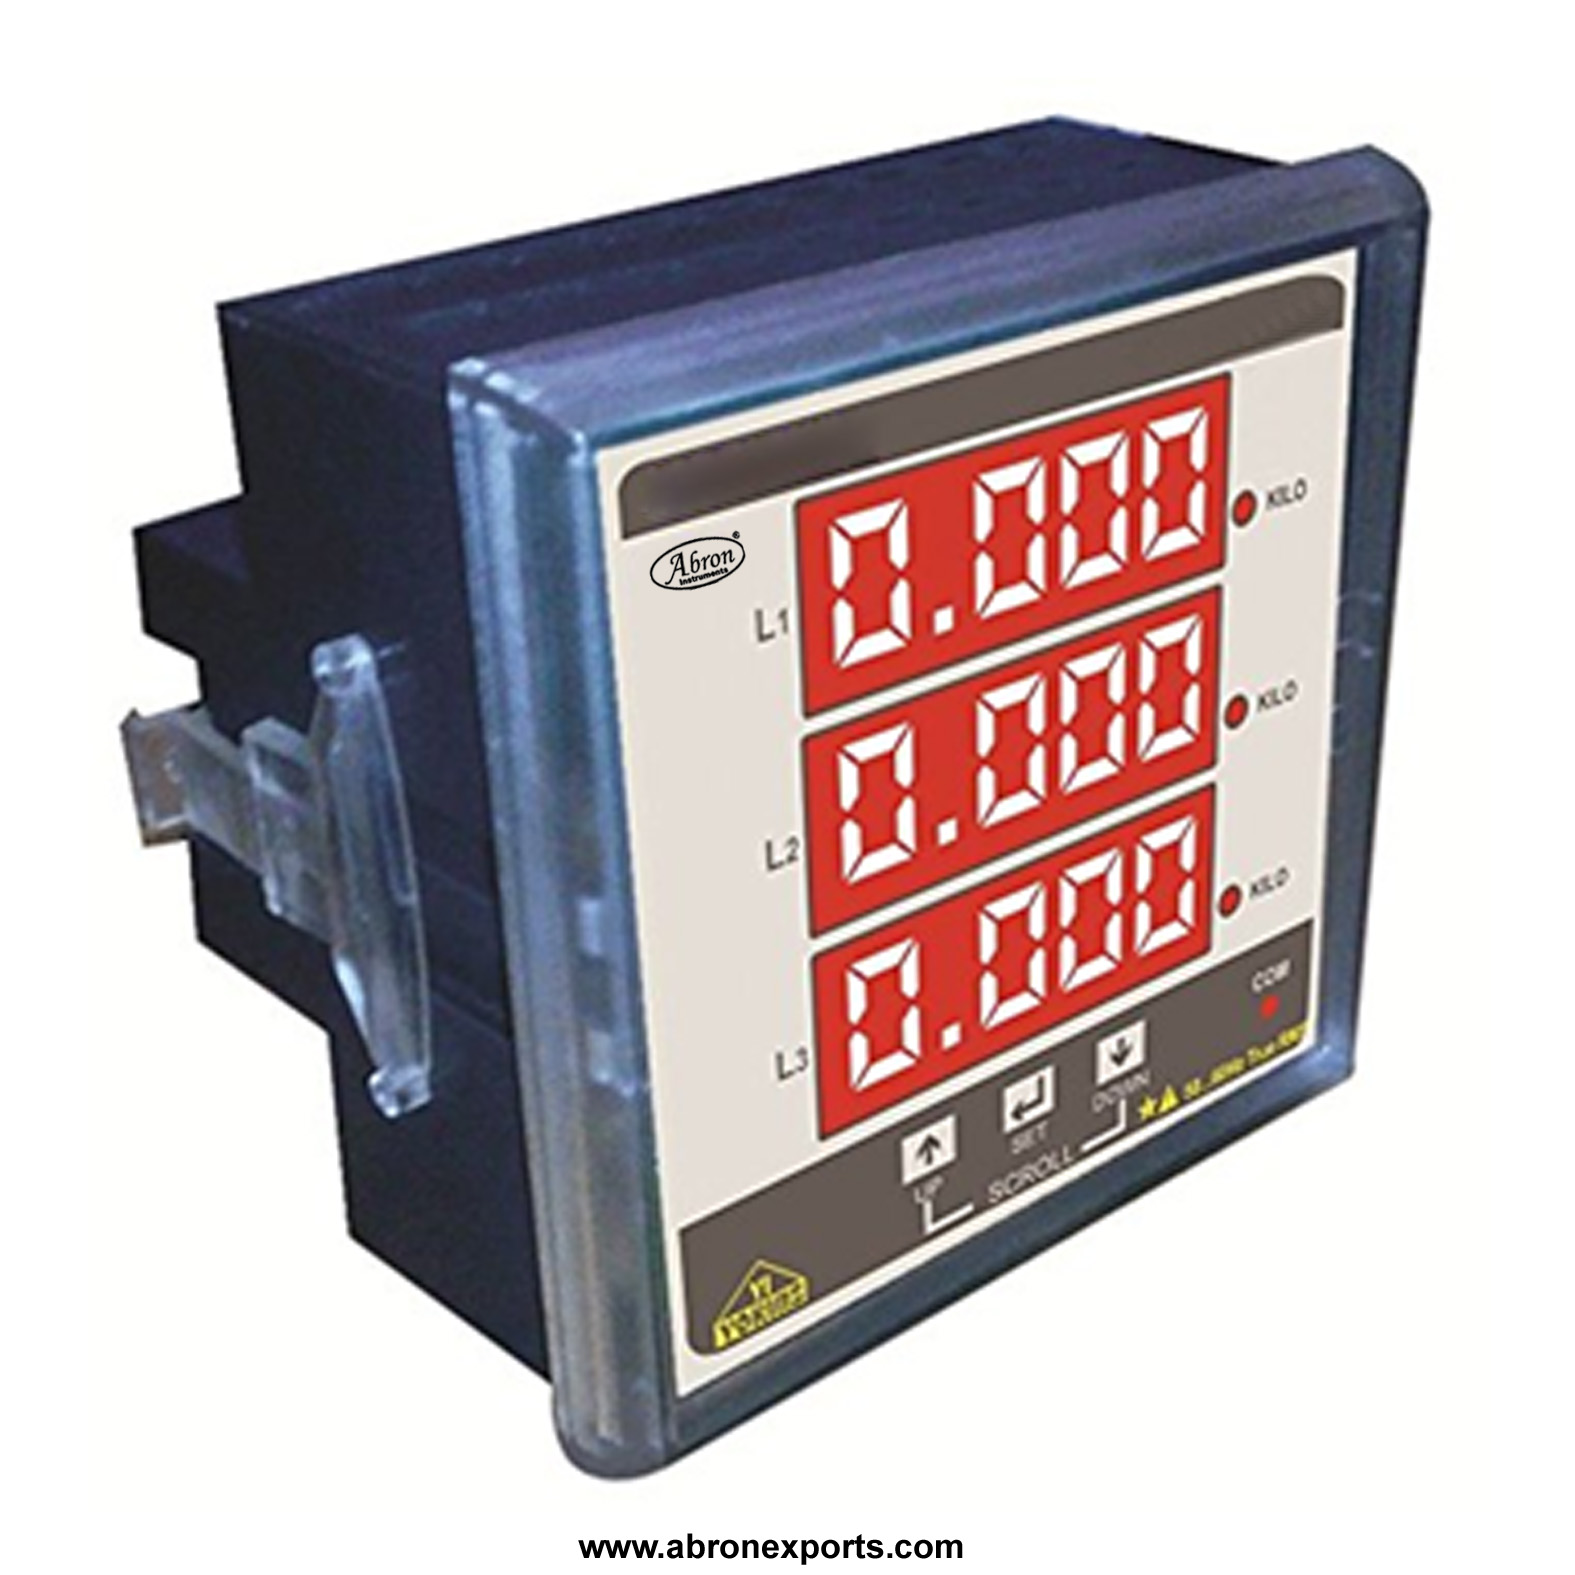 Power factor meter digital three phase 3 line ac abron AE-1325B3